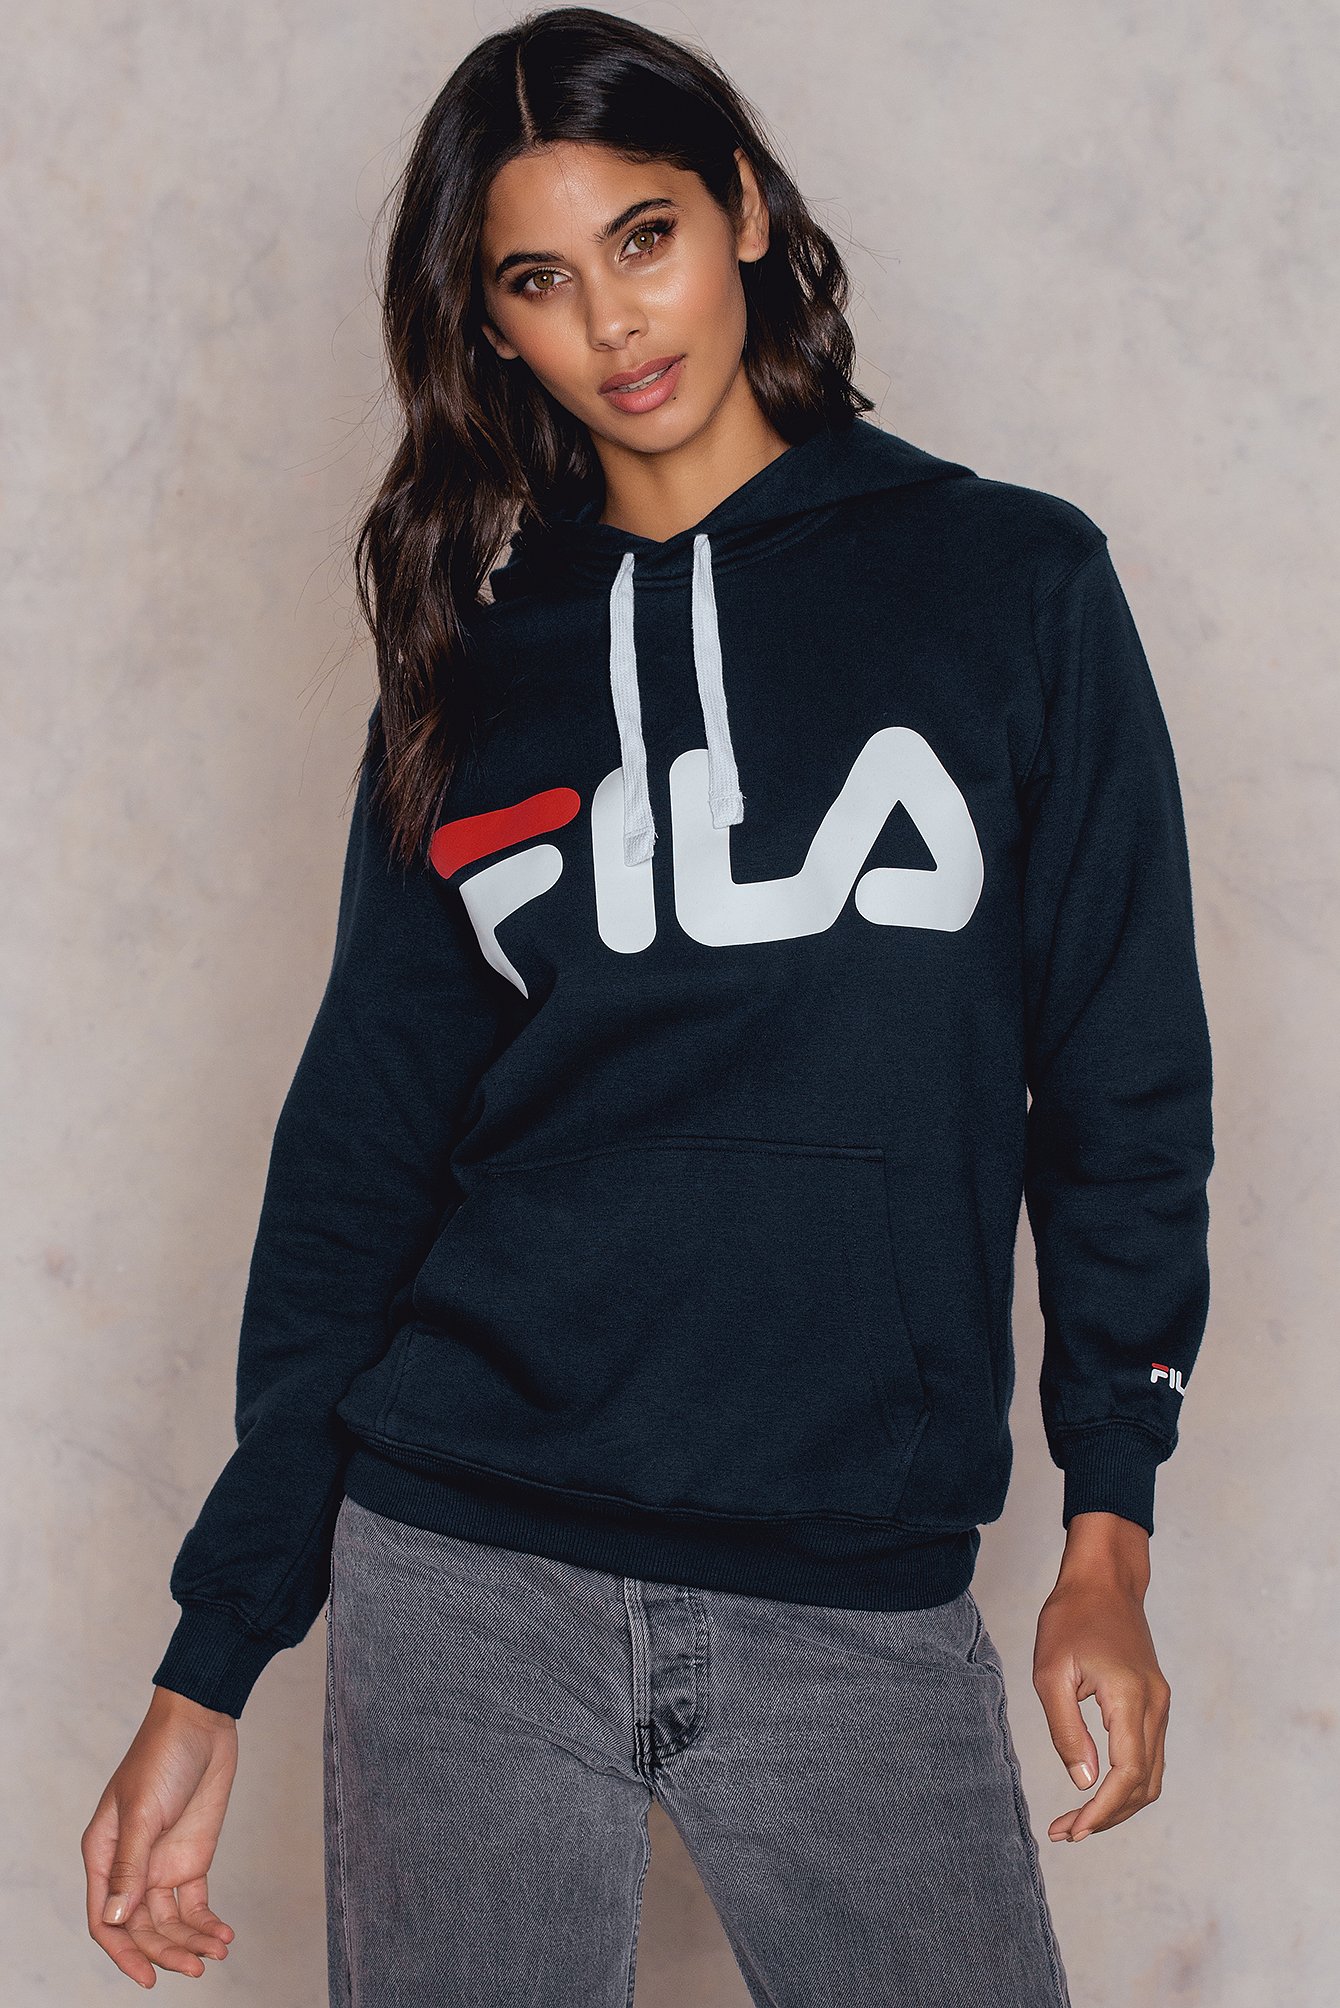 fila classic hoodie,Limited